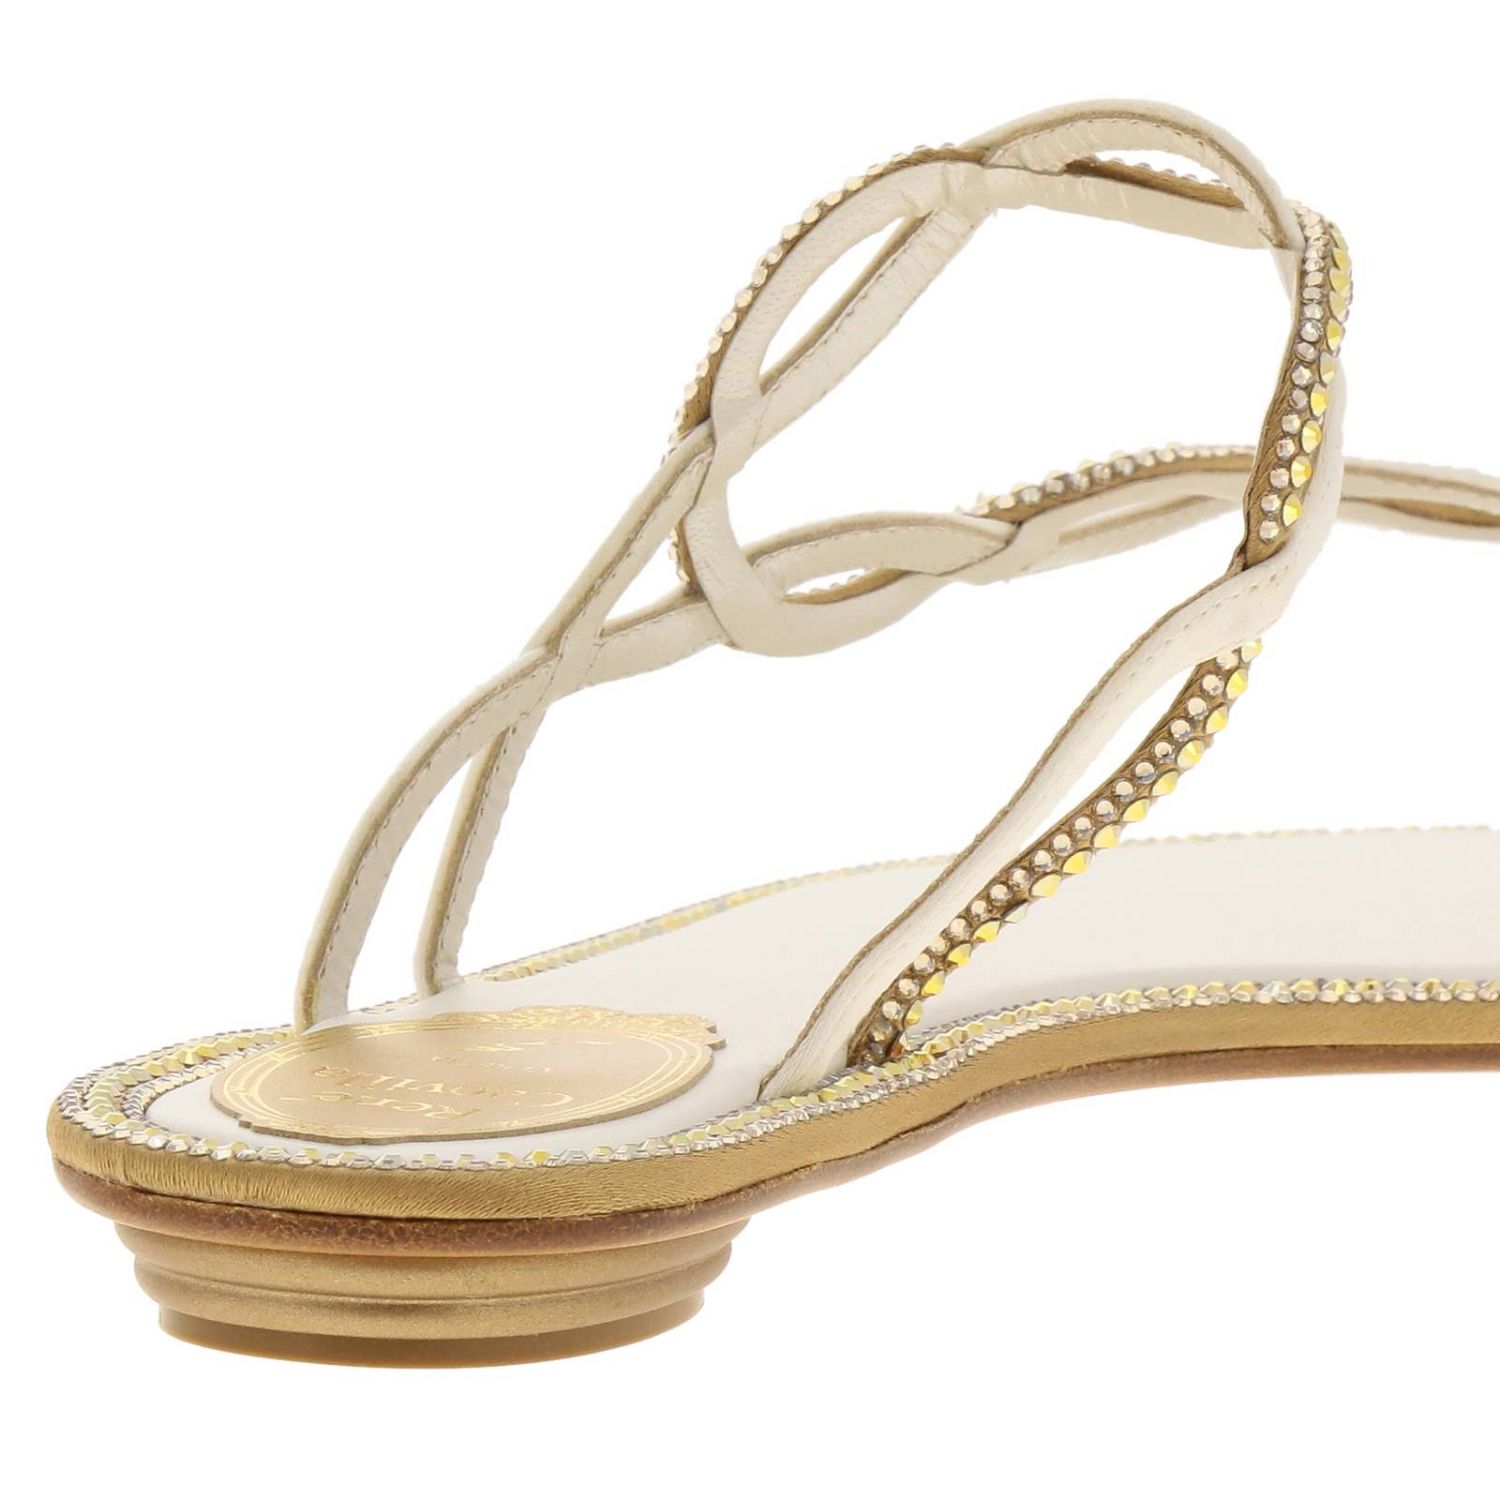 Sandales plates Rene Caovilla: Chaussures femme Rene Caovilla blanc 4